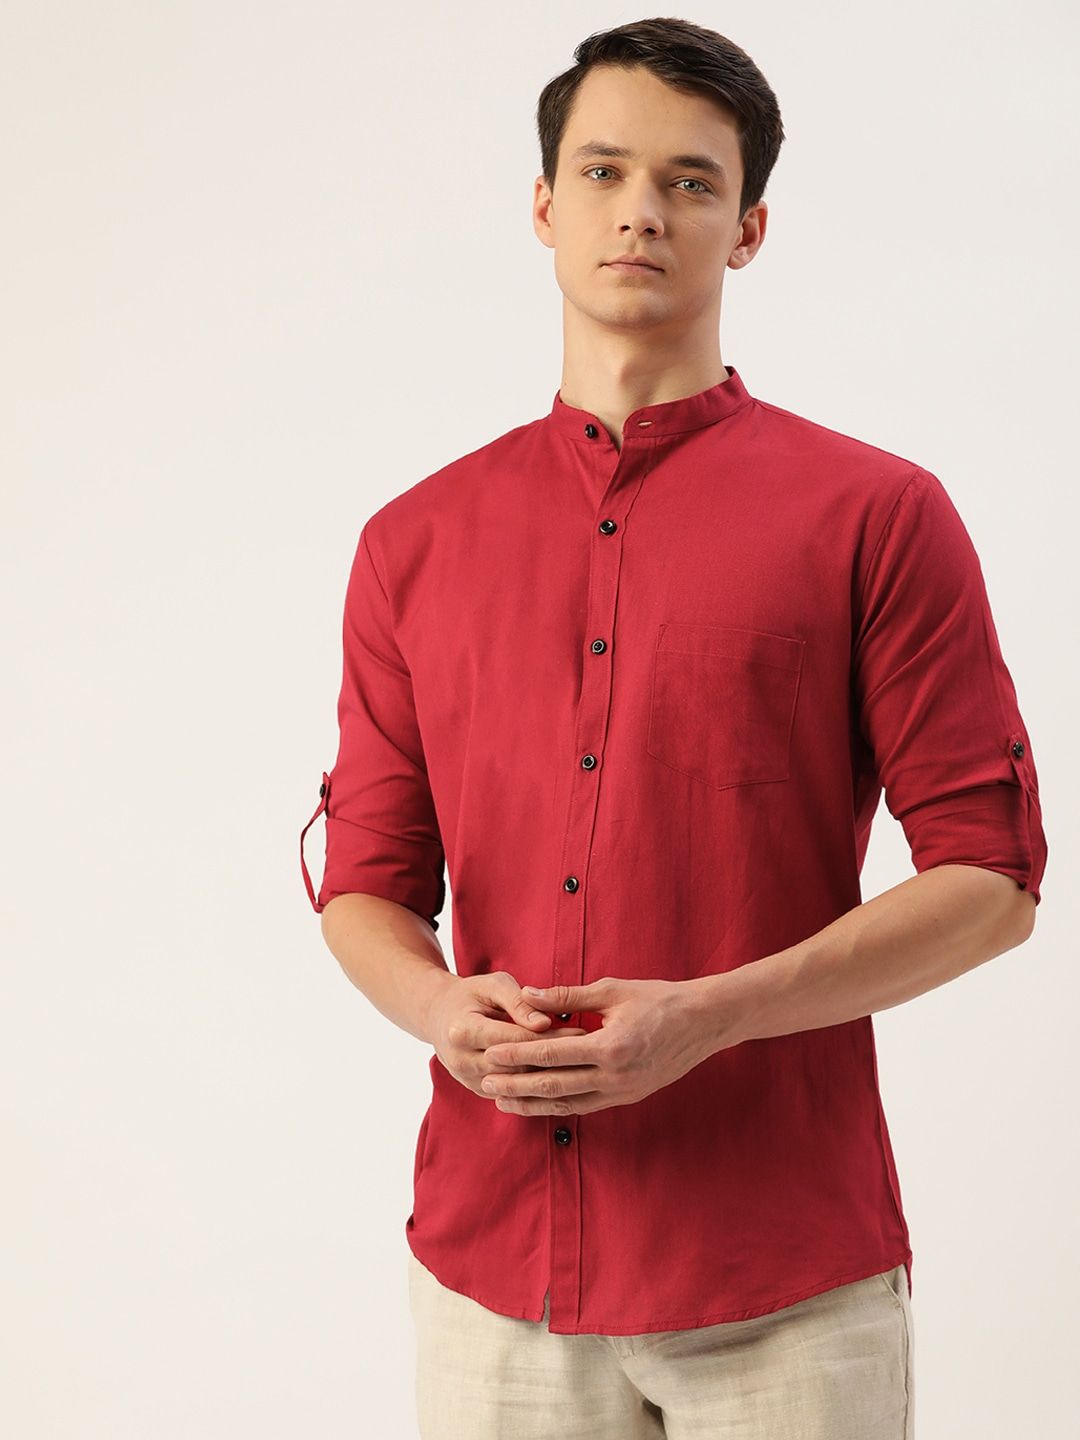 Mandarin Collar Shirts For Men